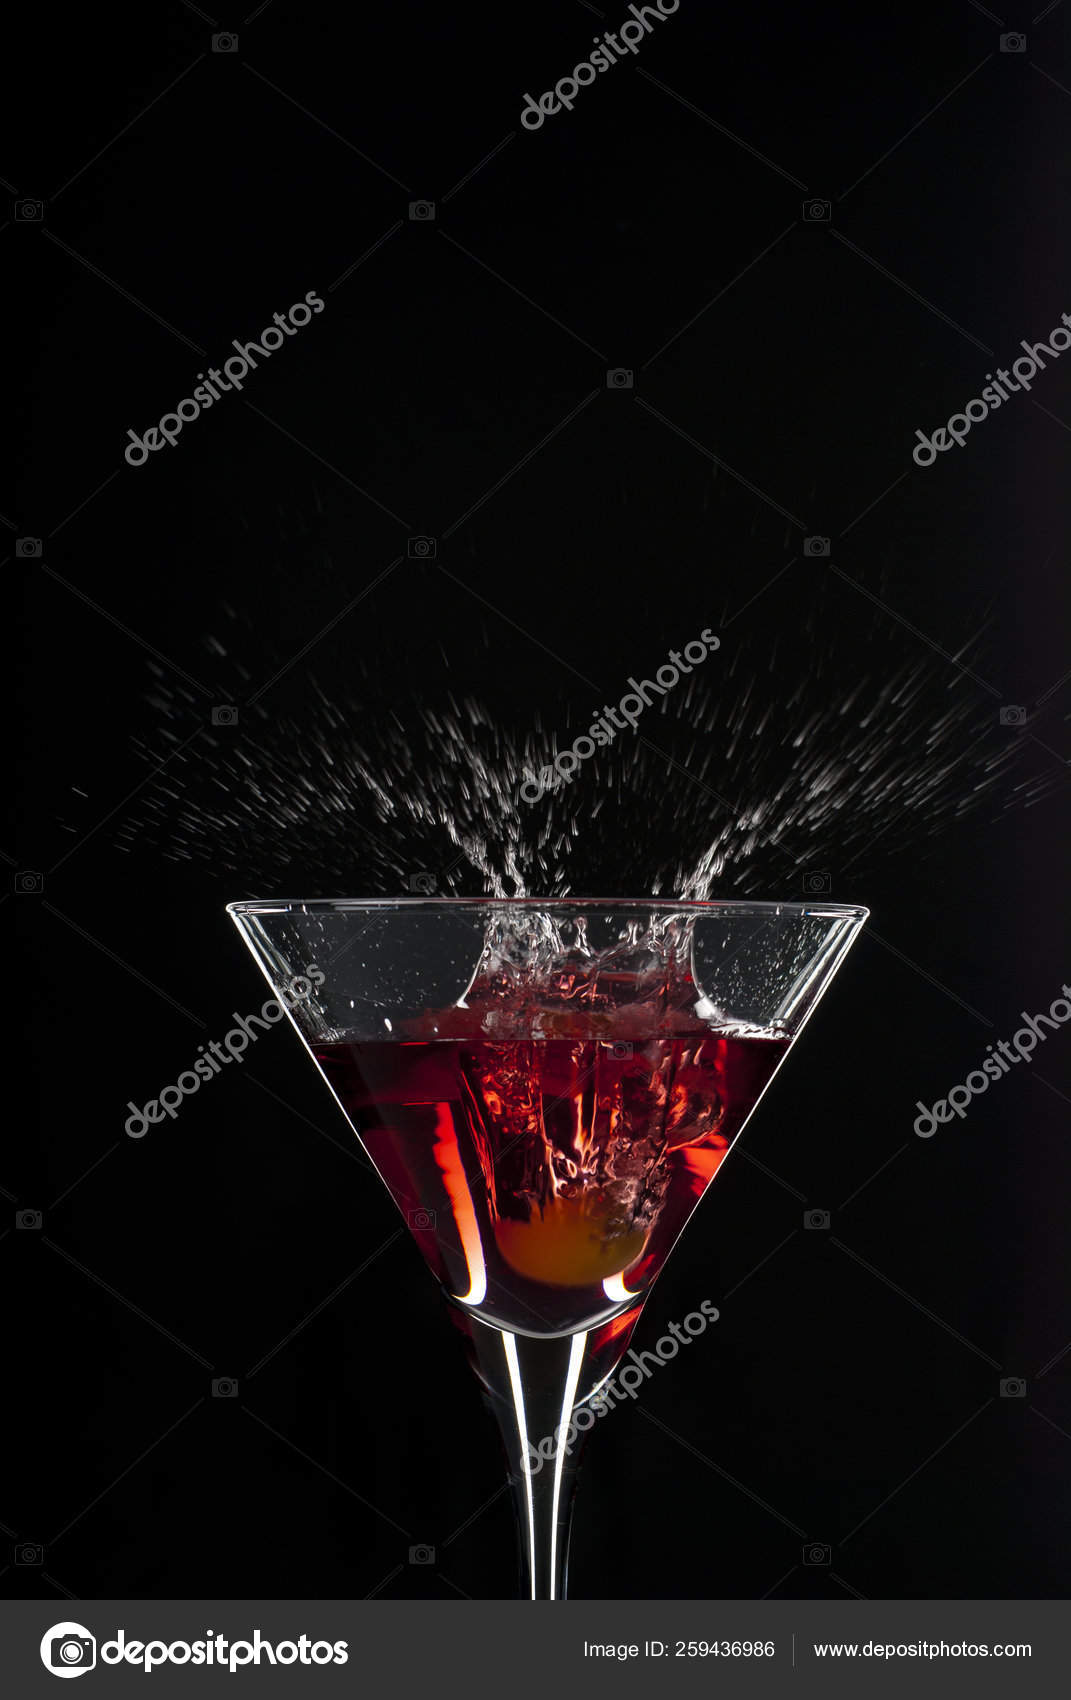 Novelista Palabra Educación Salpicadura Cóctel Con Una Aceituna Sobre Martini Rojo Con Fondo:  fotografía de stock © YAYImages #259436986 | Depositphotos